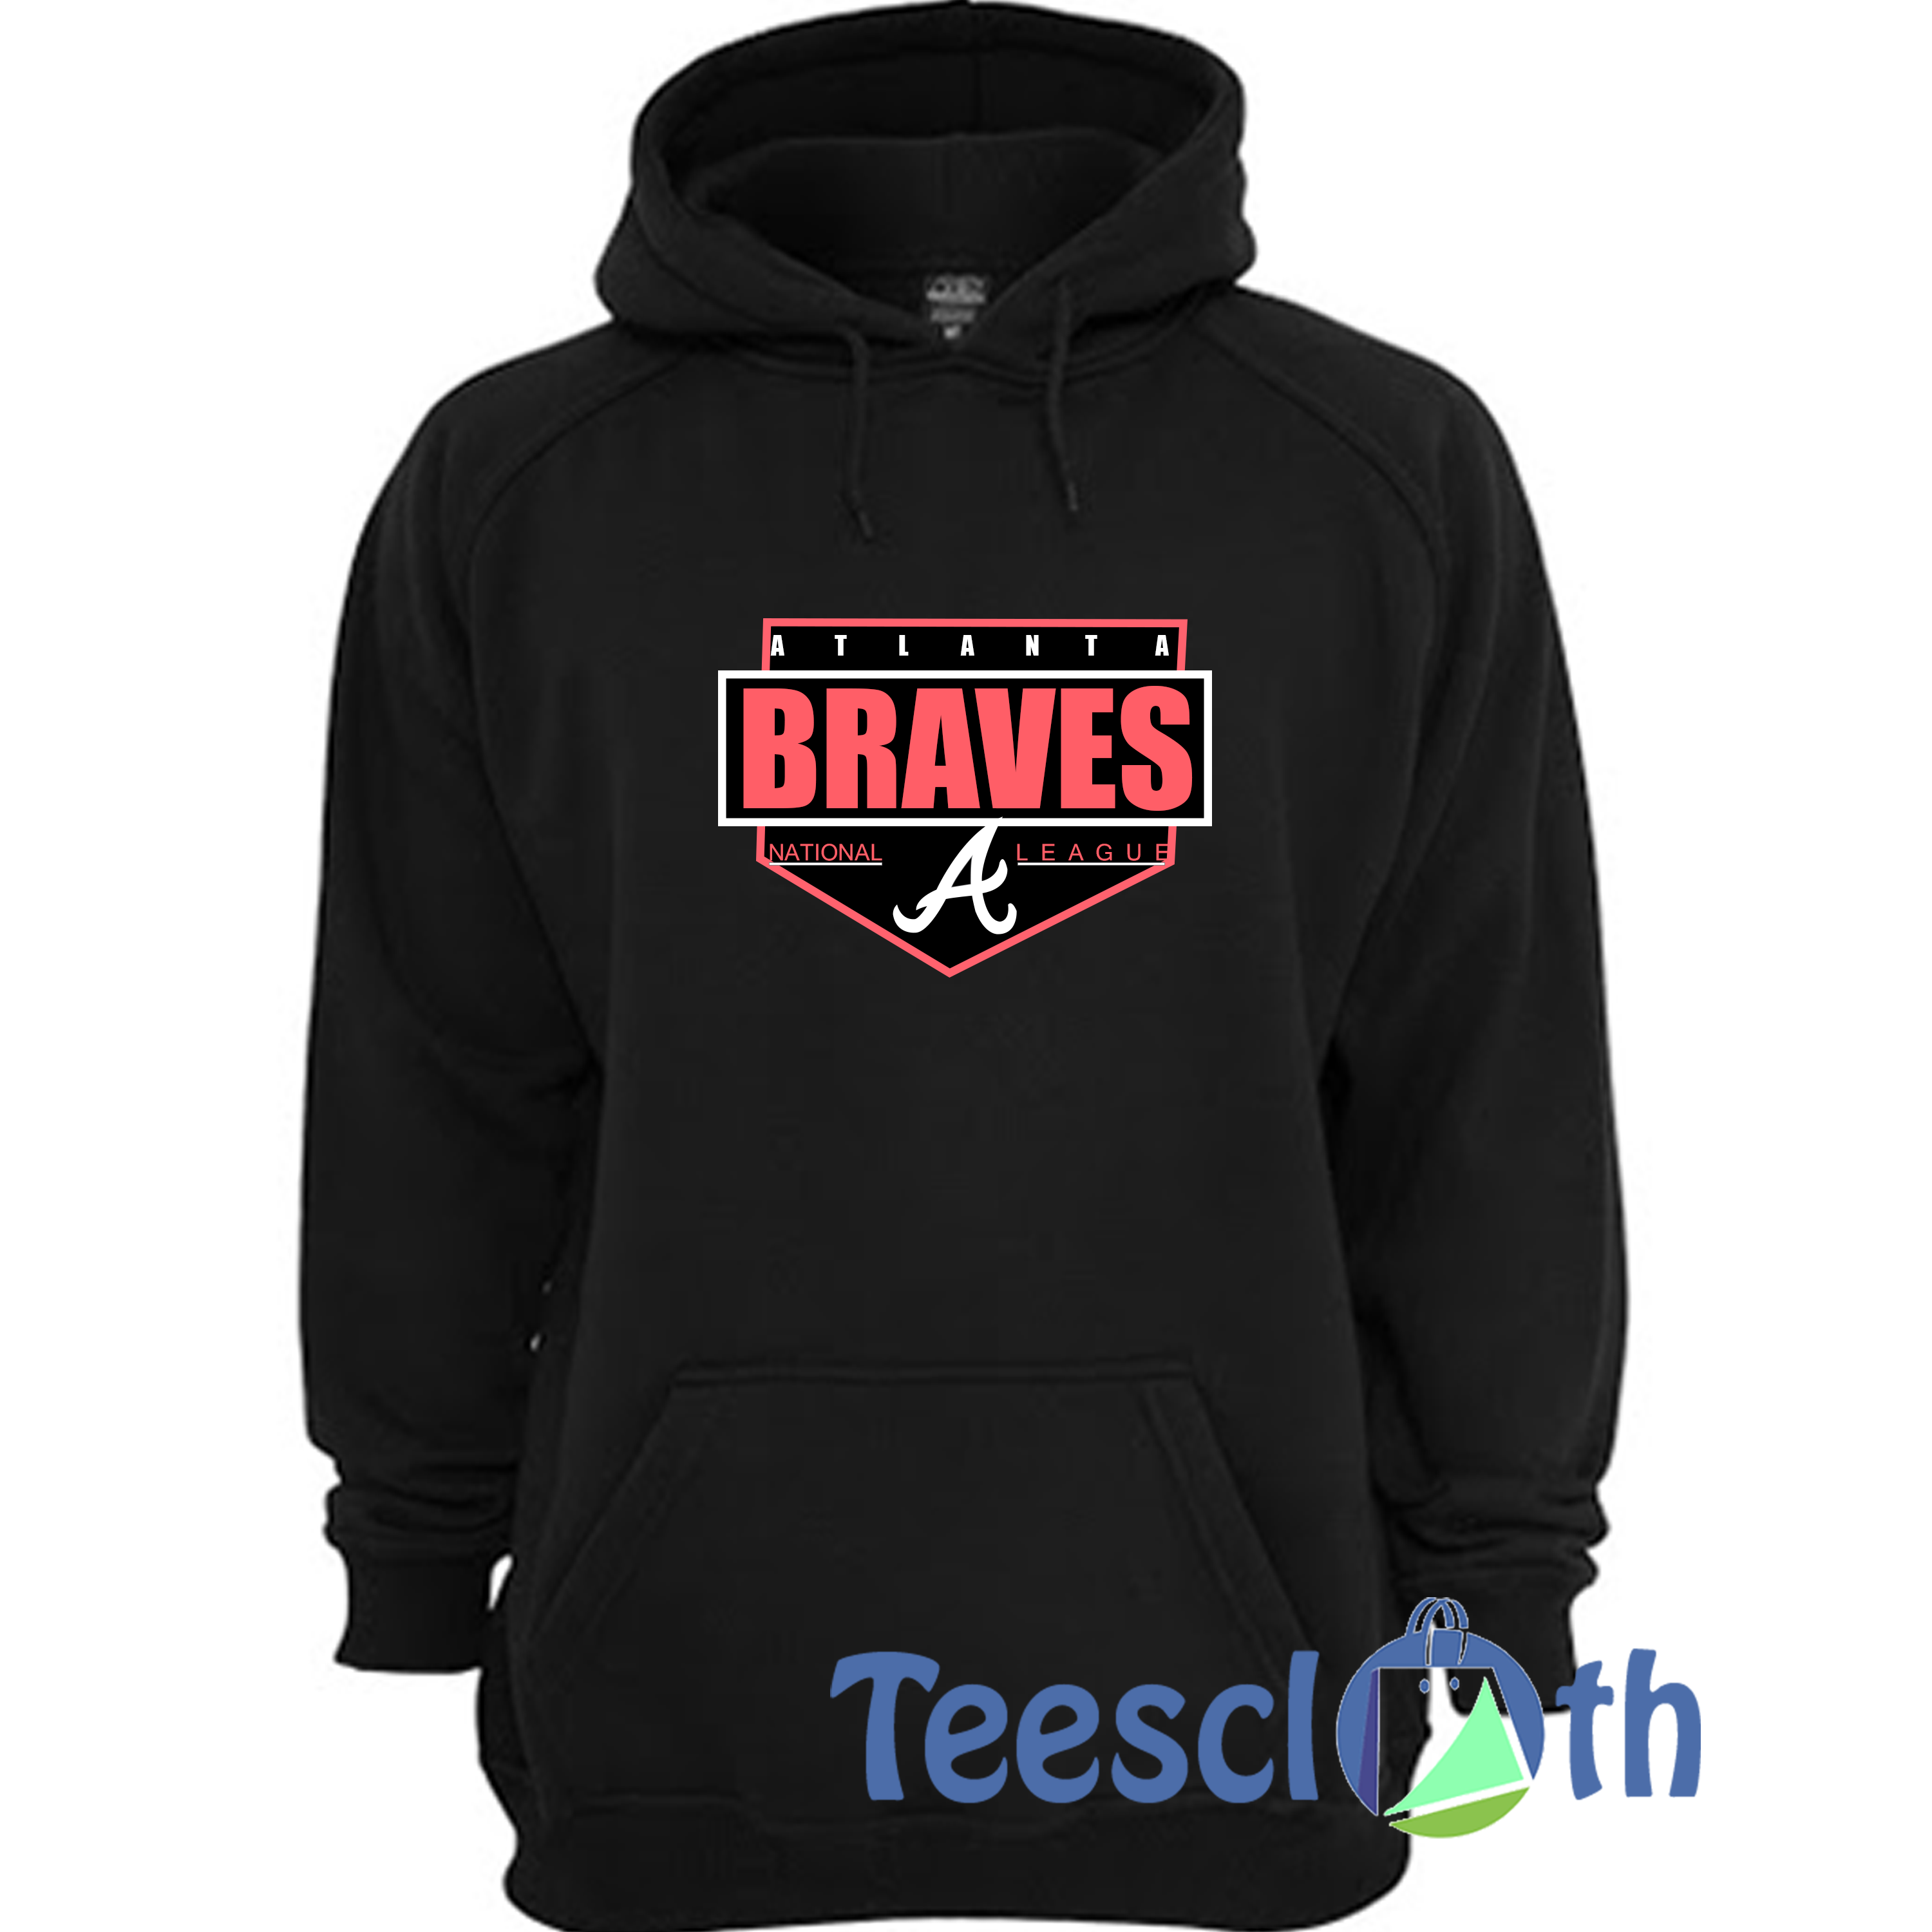 braves hoodies near me